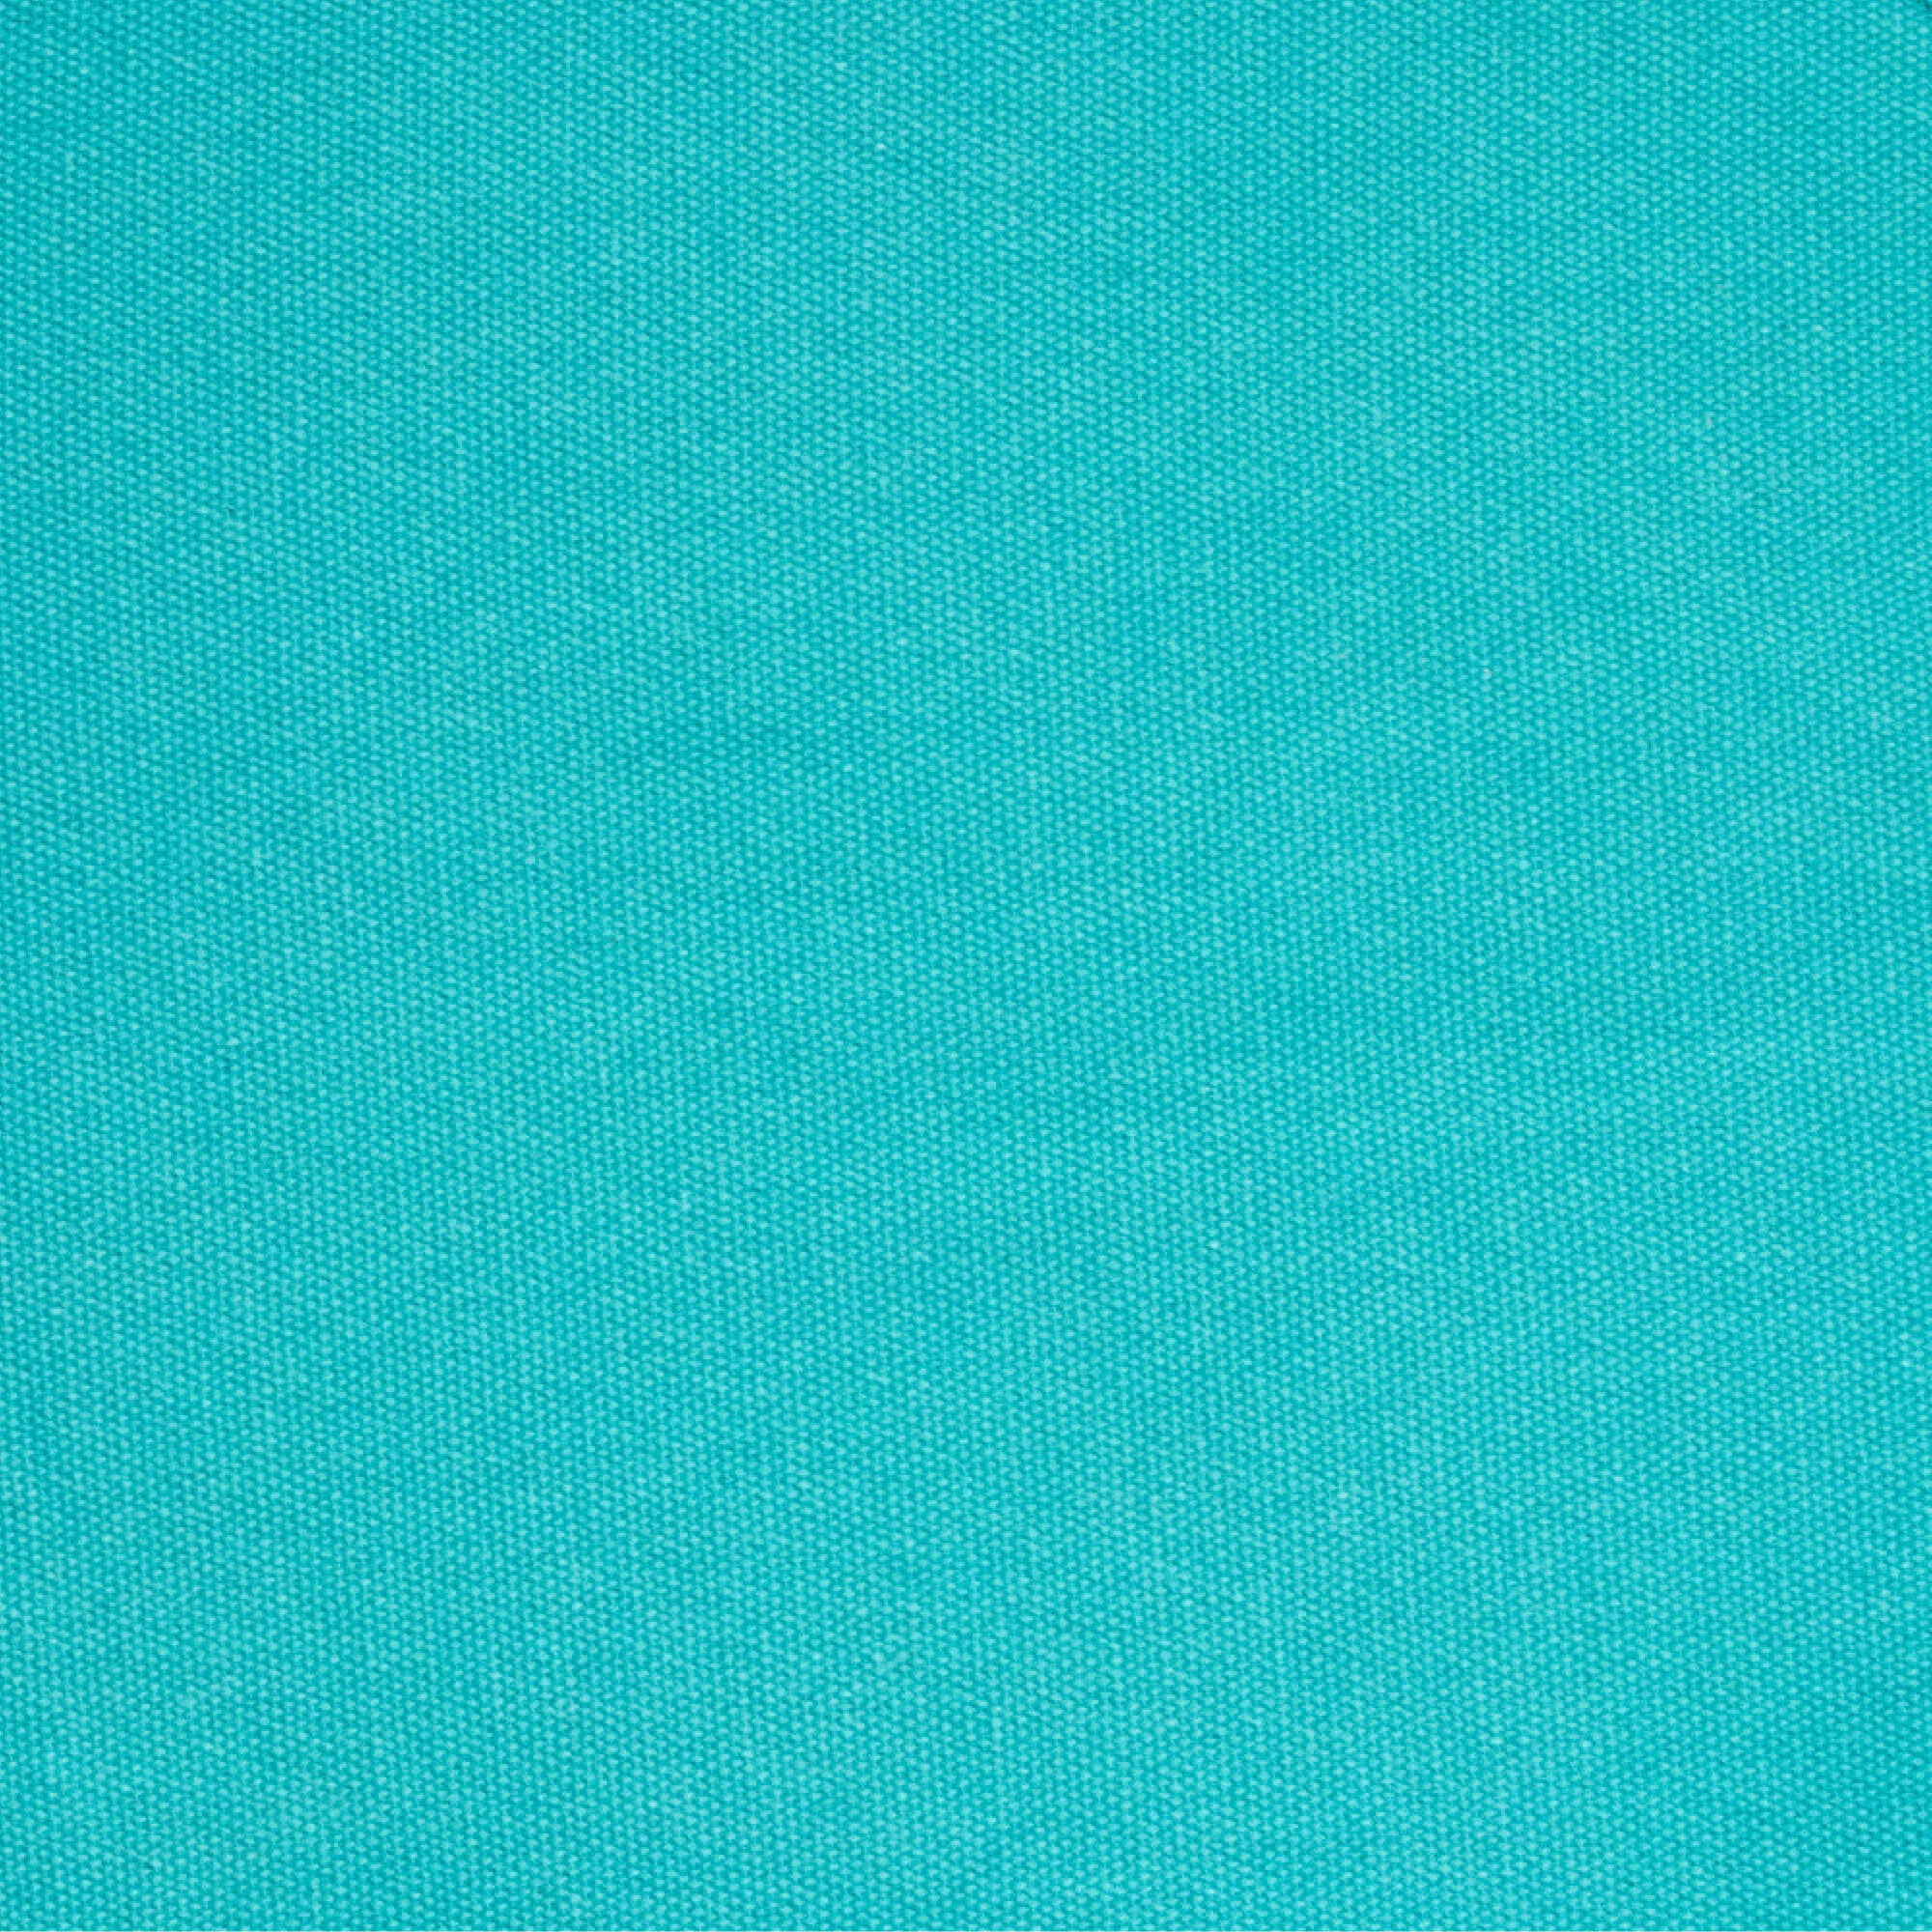 Myga Zafu Meditation Cushion - Turquoise 7/7